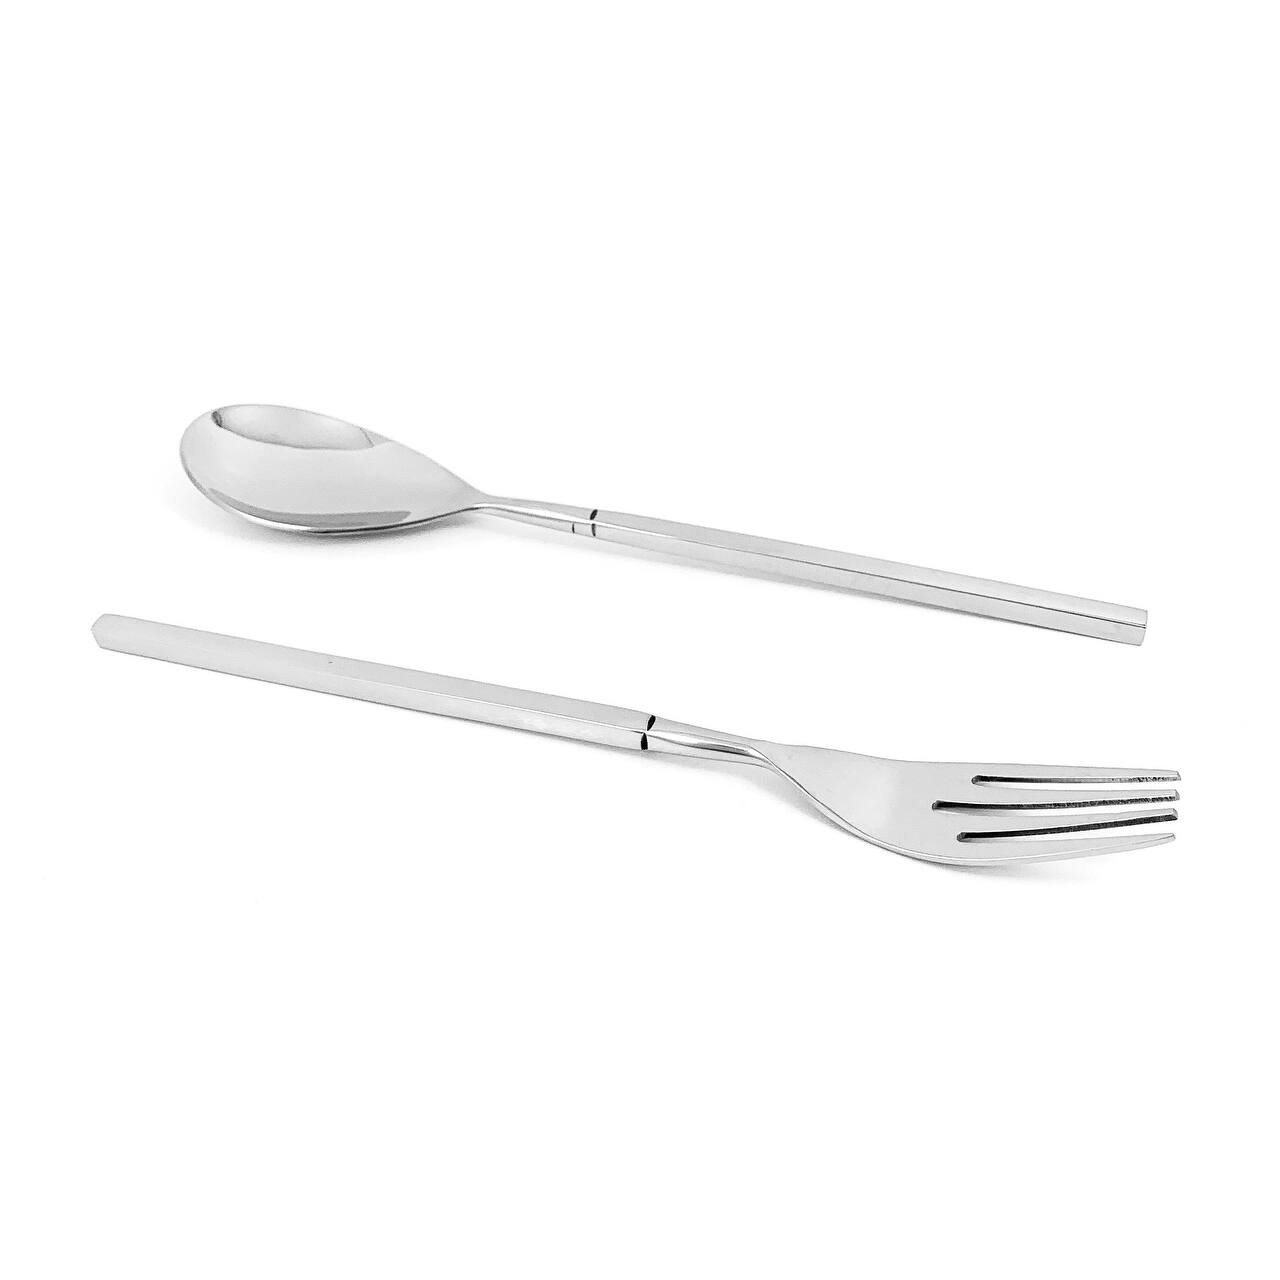 Vibhsa Stainless Steel Salad Fork and Dessert Spoon Set of 12